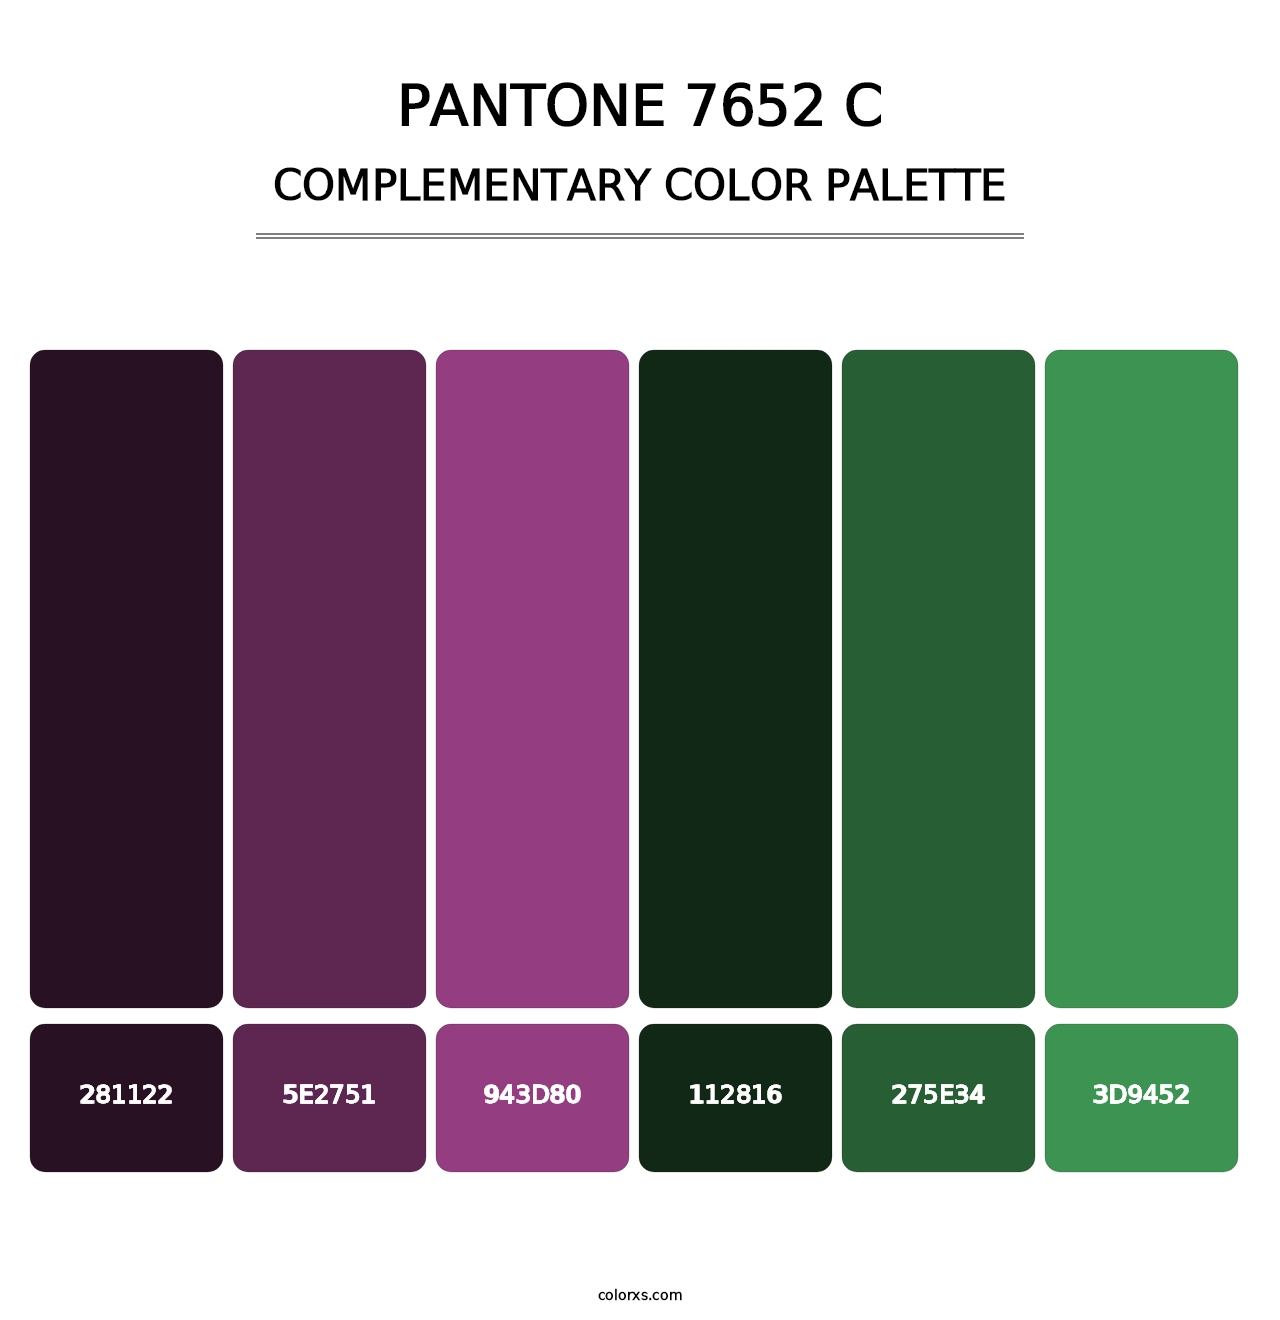 PANTONE 7652 C - Complementary Color Palette